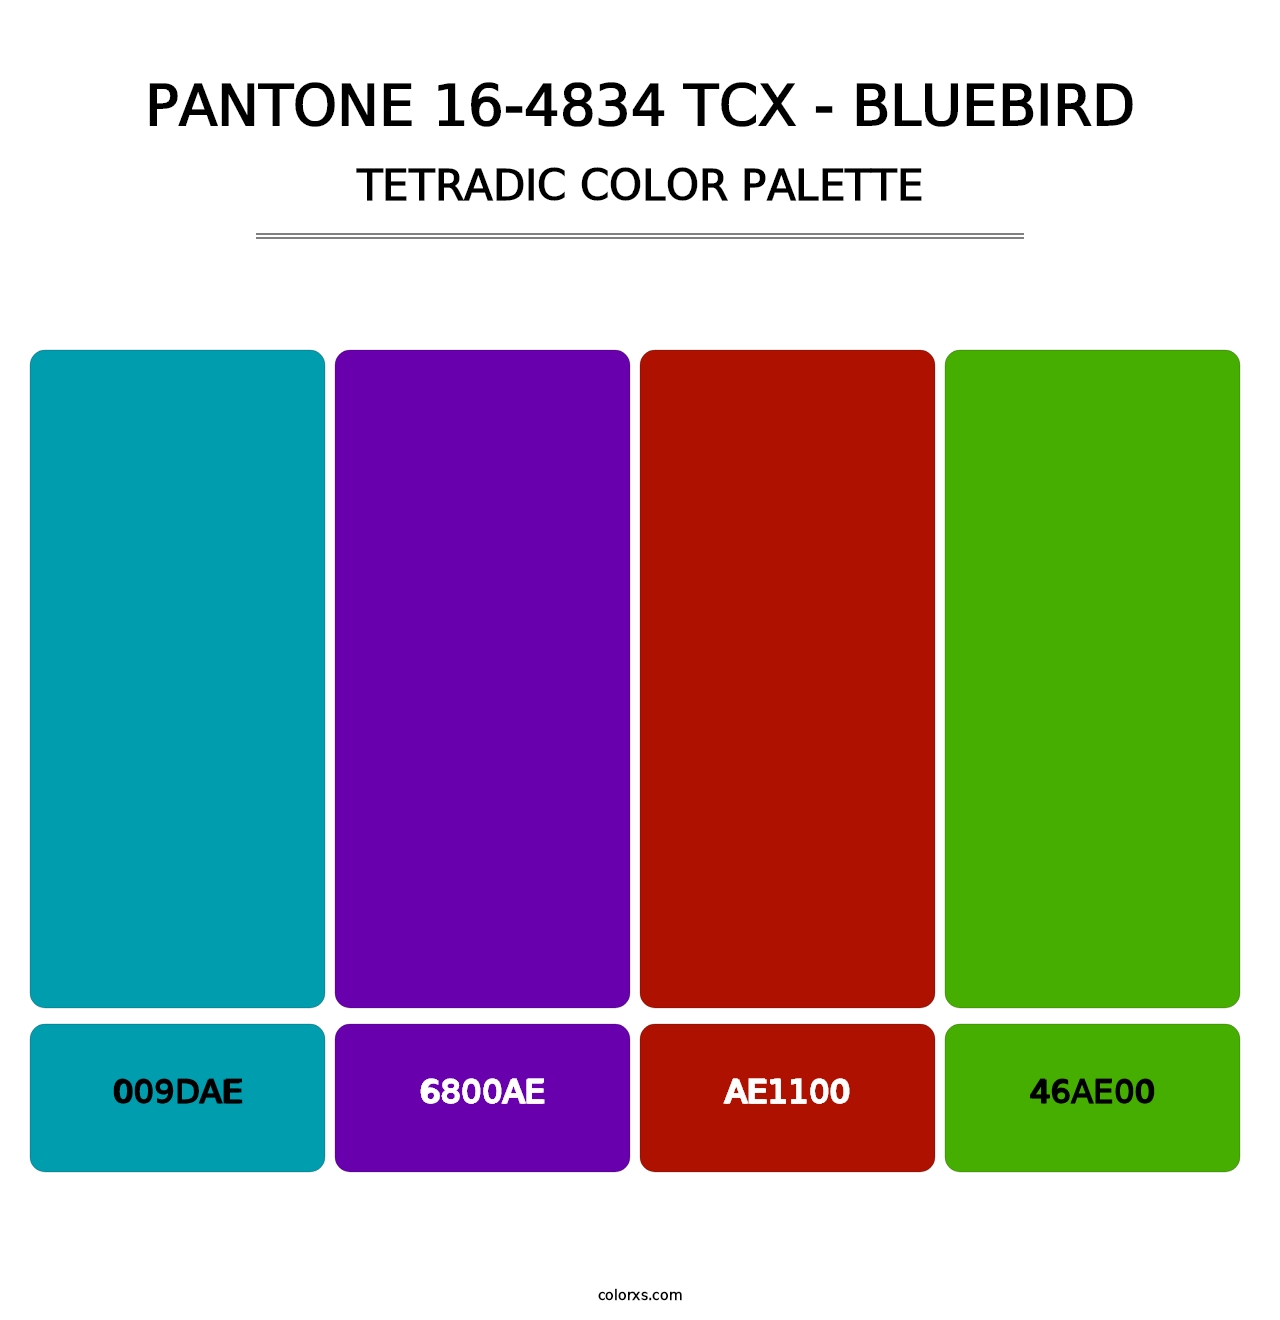 PANTONE 16-4834 TCX - Bluebird - Tetradic Color Palette